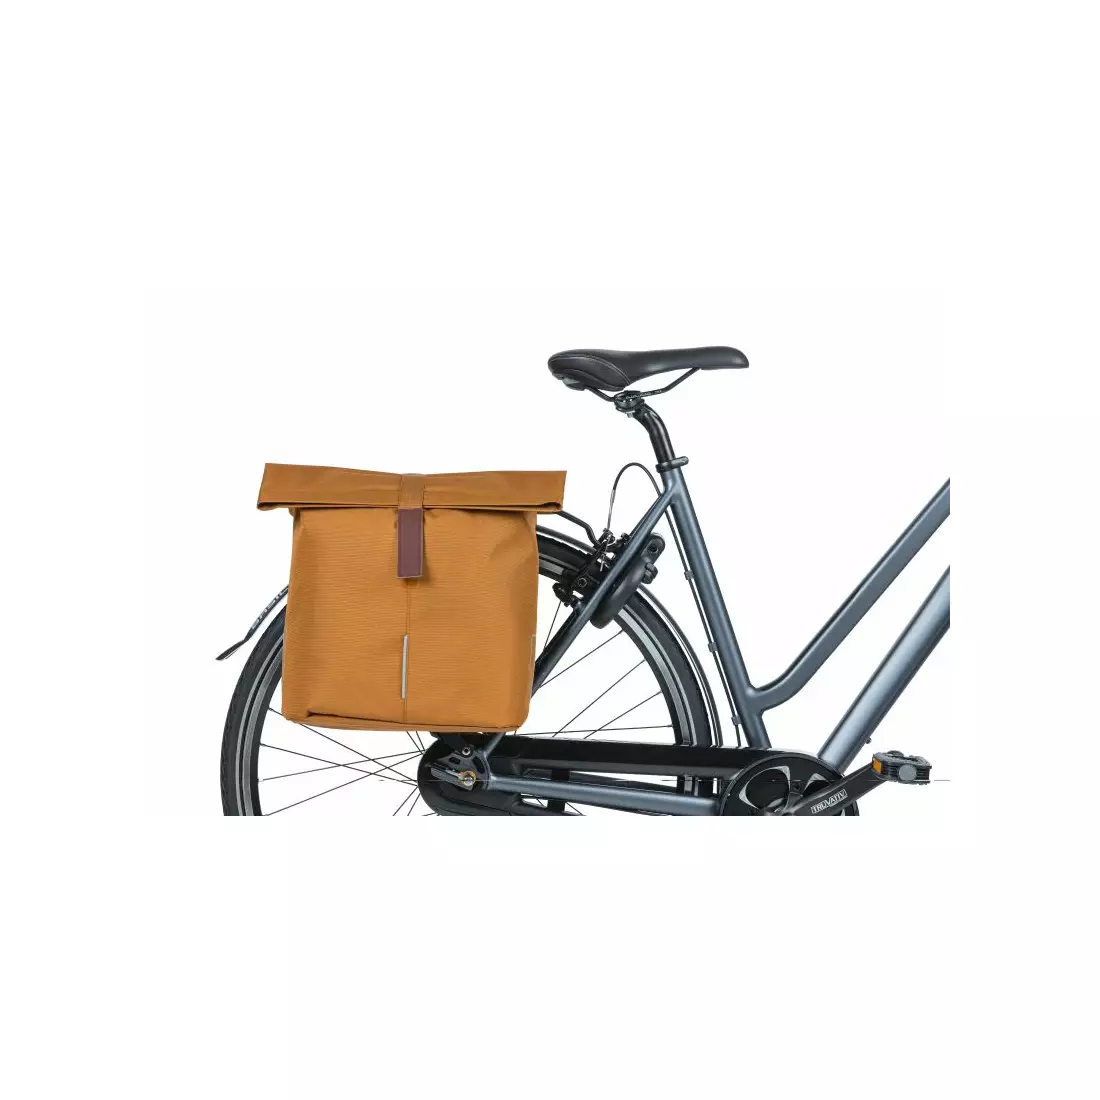 BASIL rear bicycle panniers CITY DOUBLE BAG 32L camel brown 18073